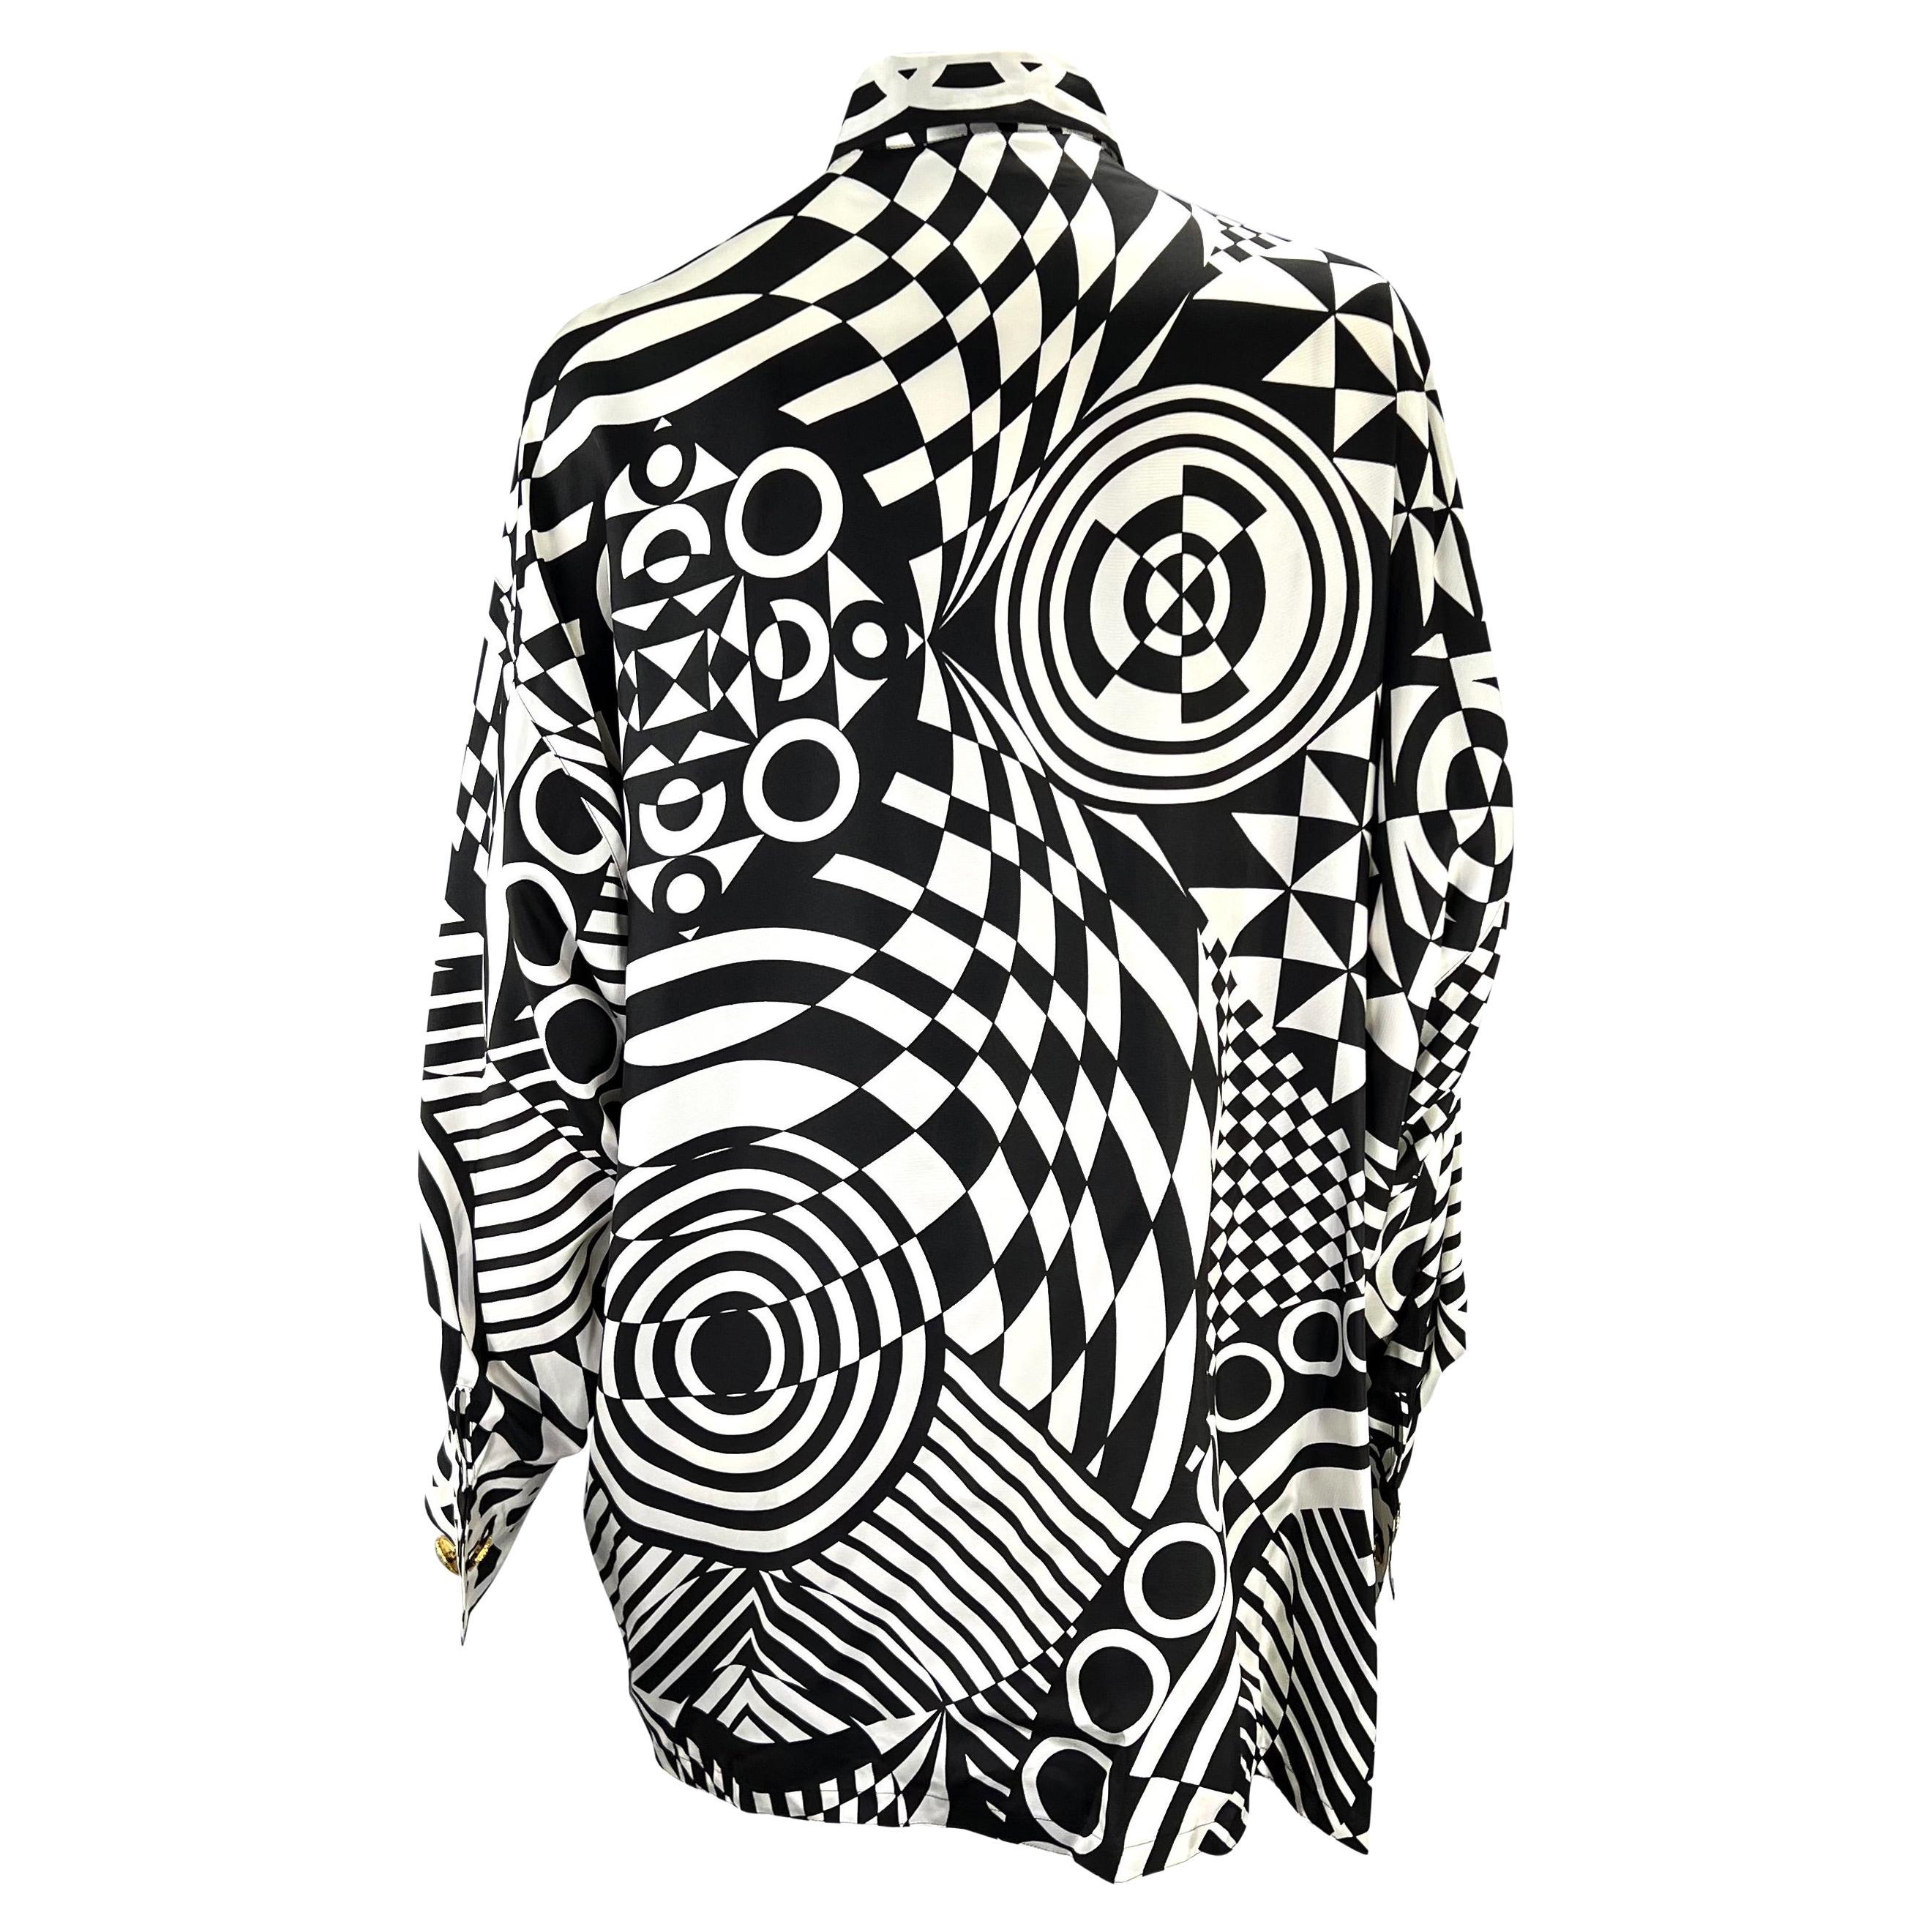 S/S 1992 Gianni Versace Couture Silk Black & White Geometric Print Button Down For Sale 1